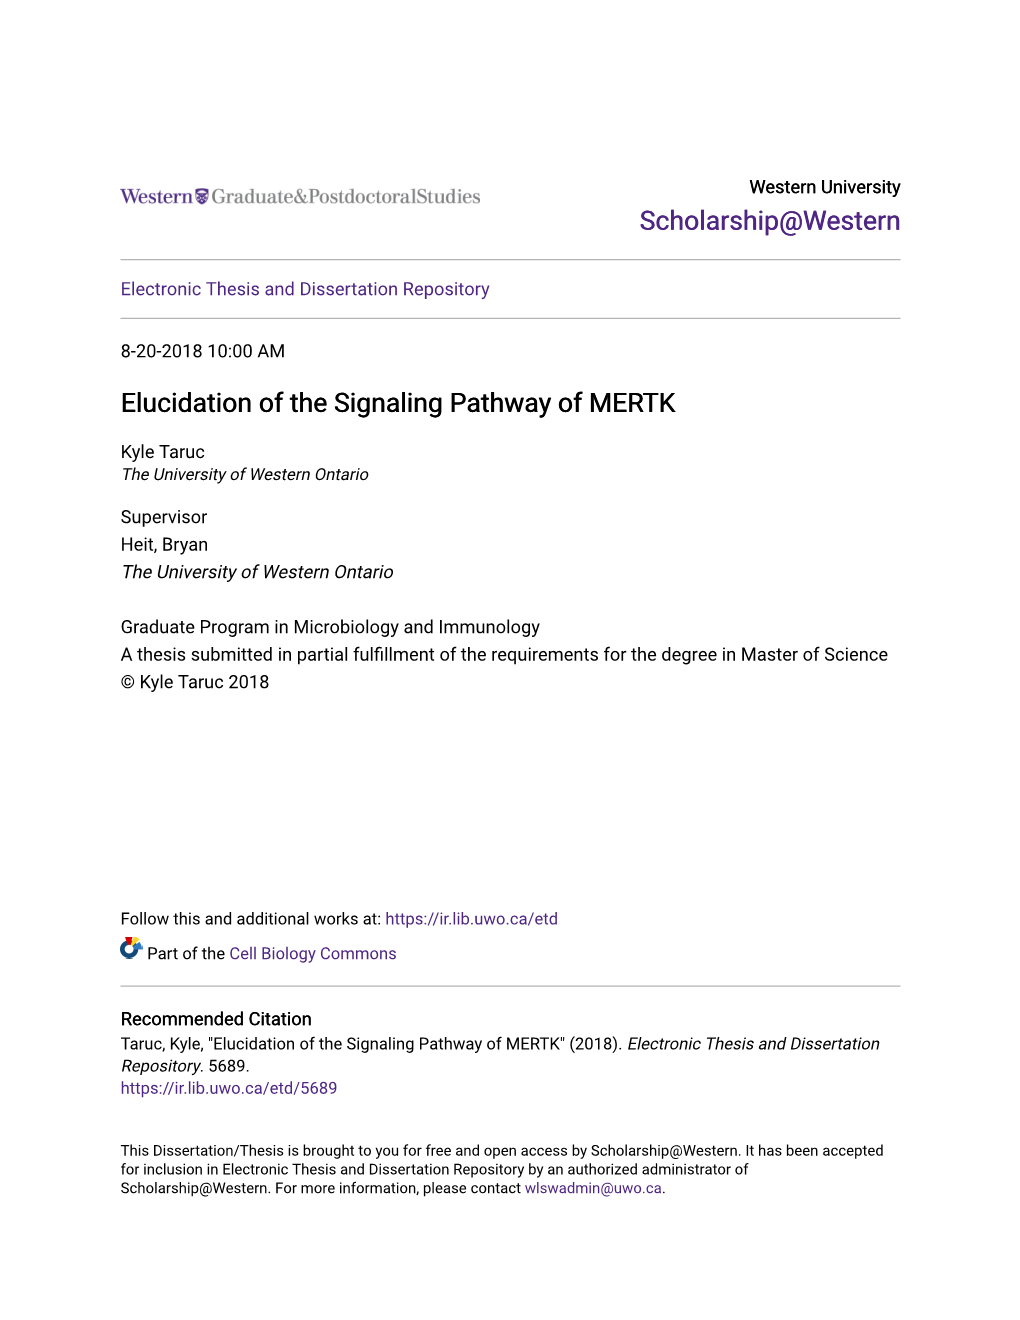 Elucidation of the Signaling Pathway of MERTK